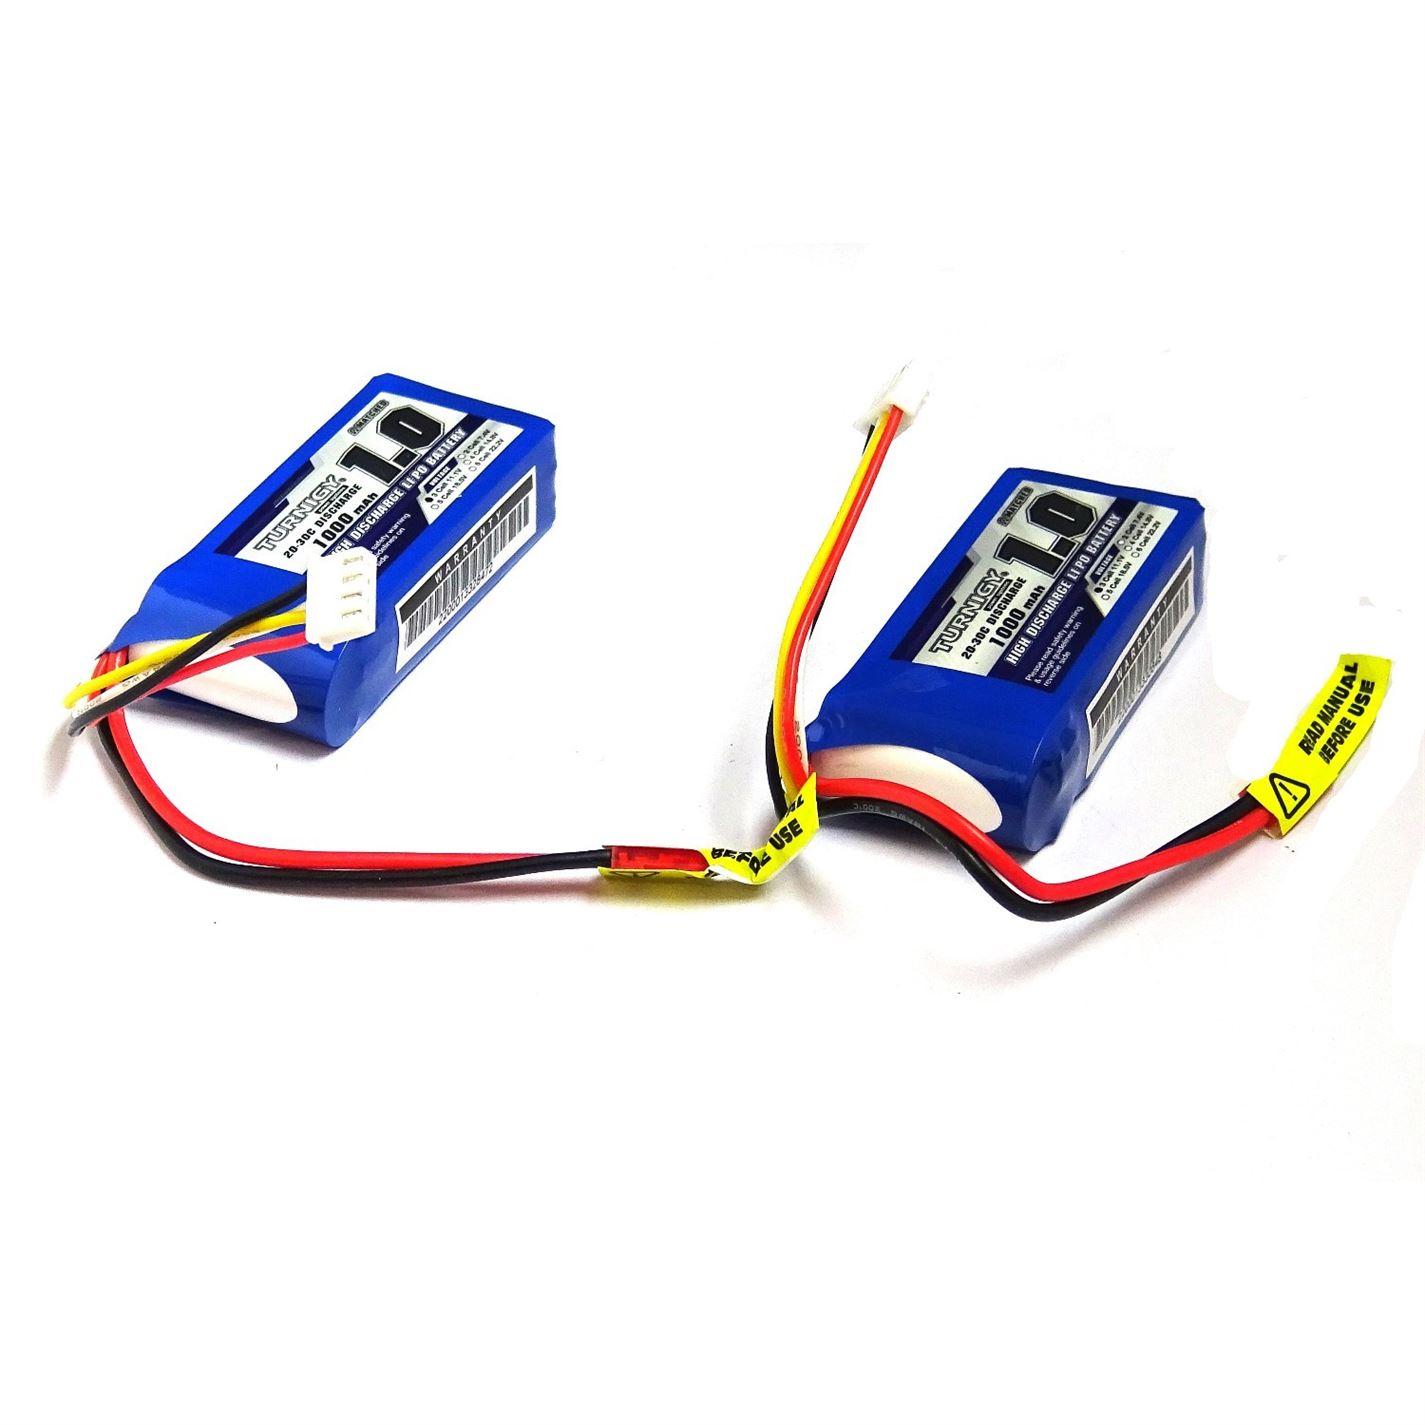 Twin Pack Turnigy 1000mAh 3S 20C-30C Lipo Pack Battery - UK Seller